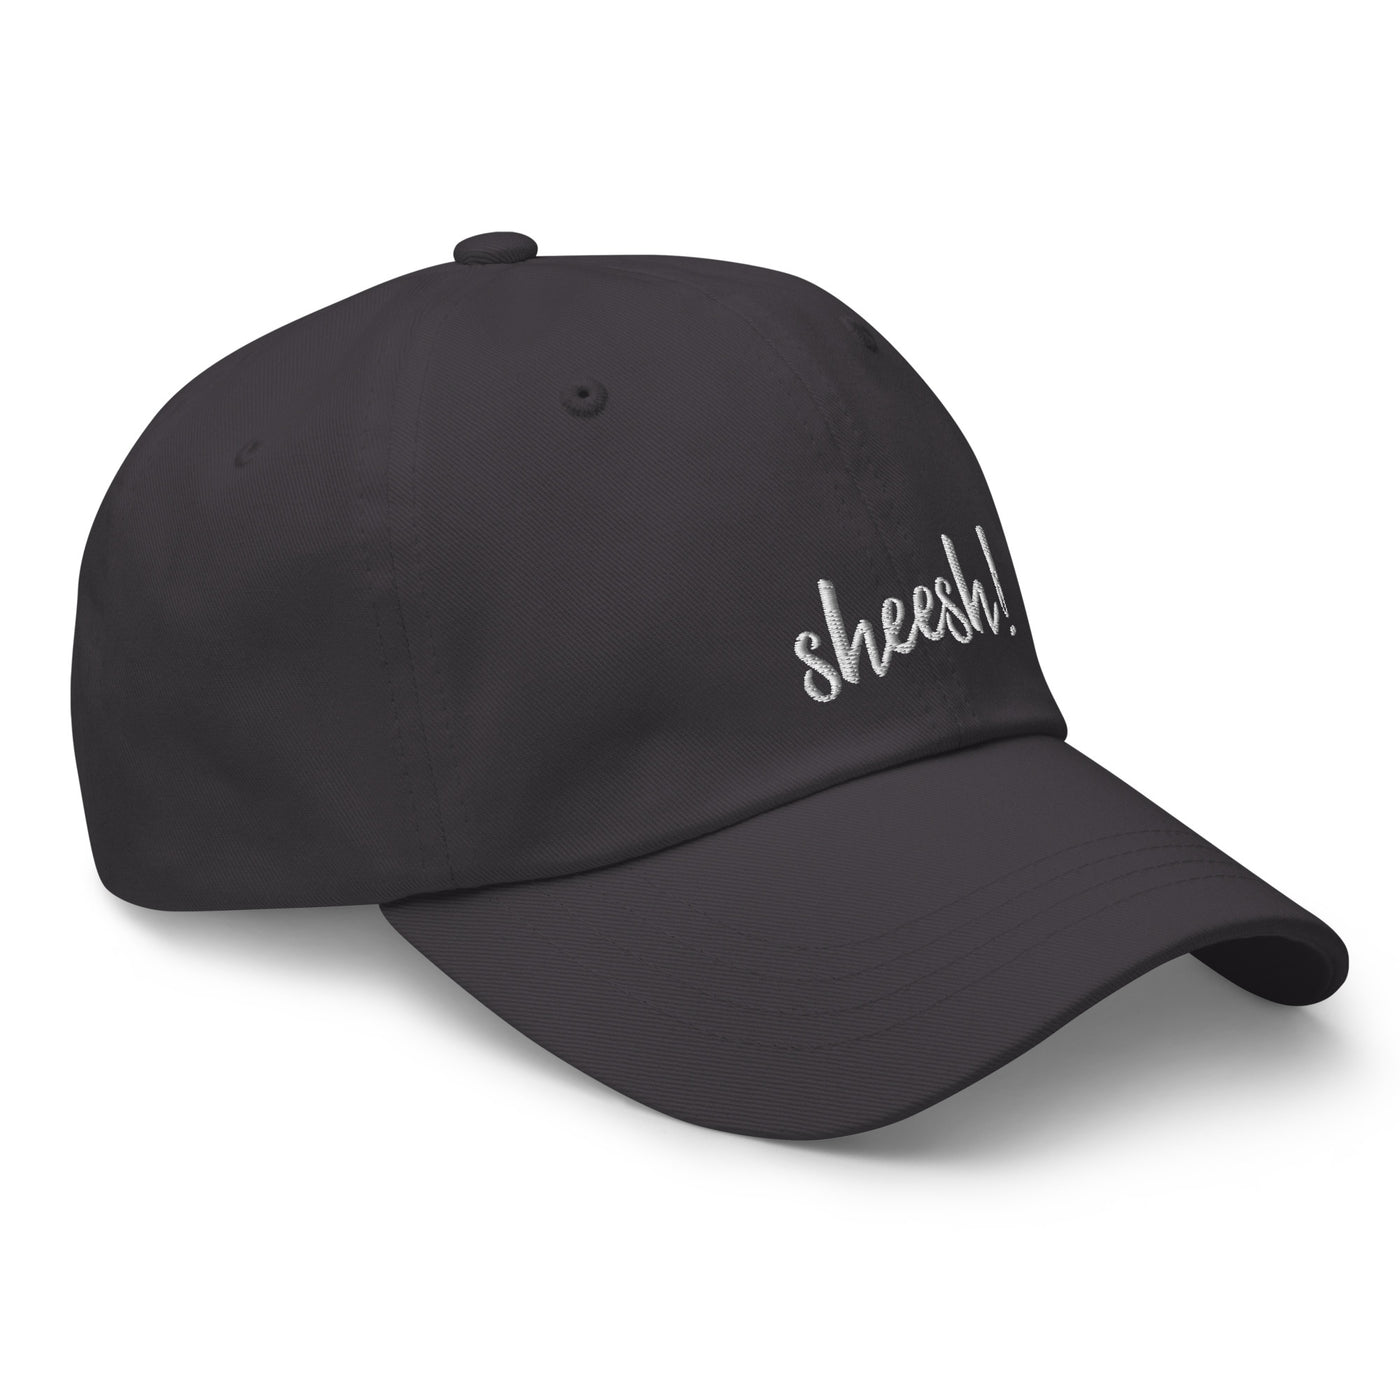 SHEESH unisex hat